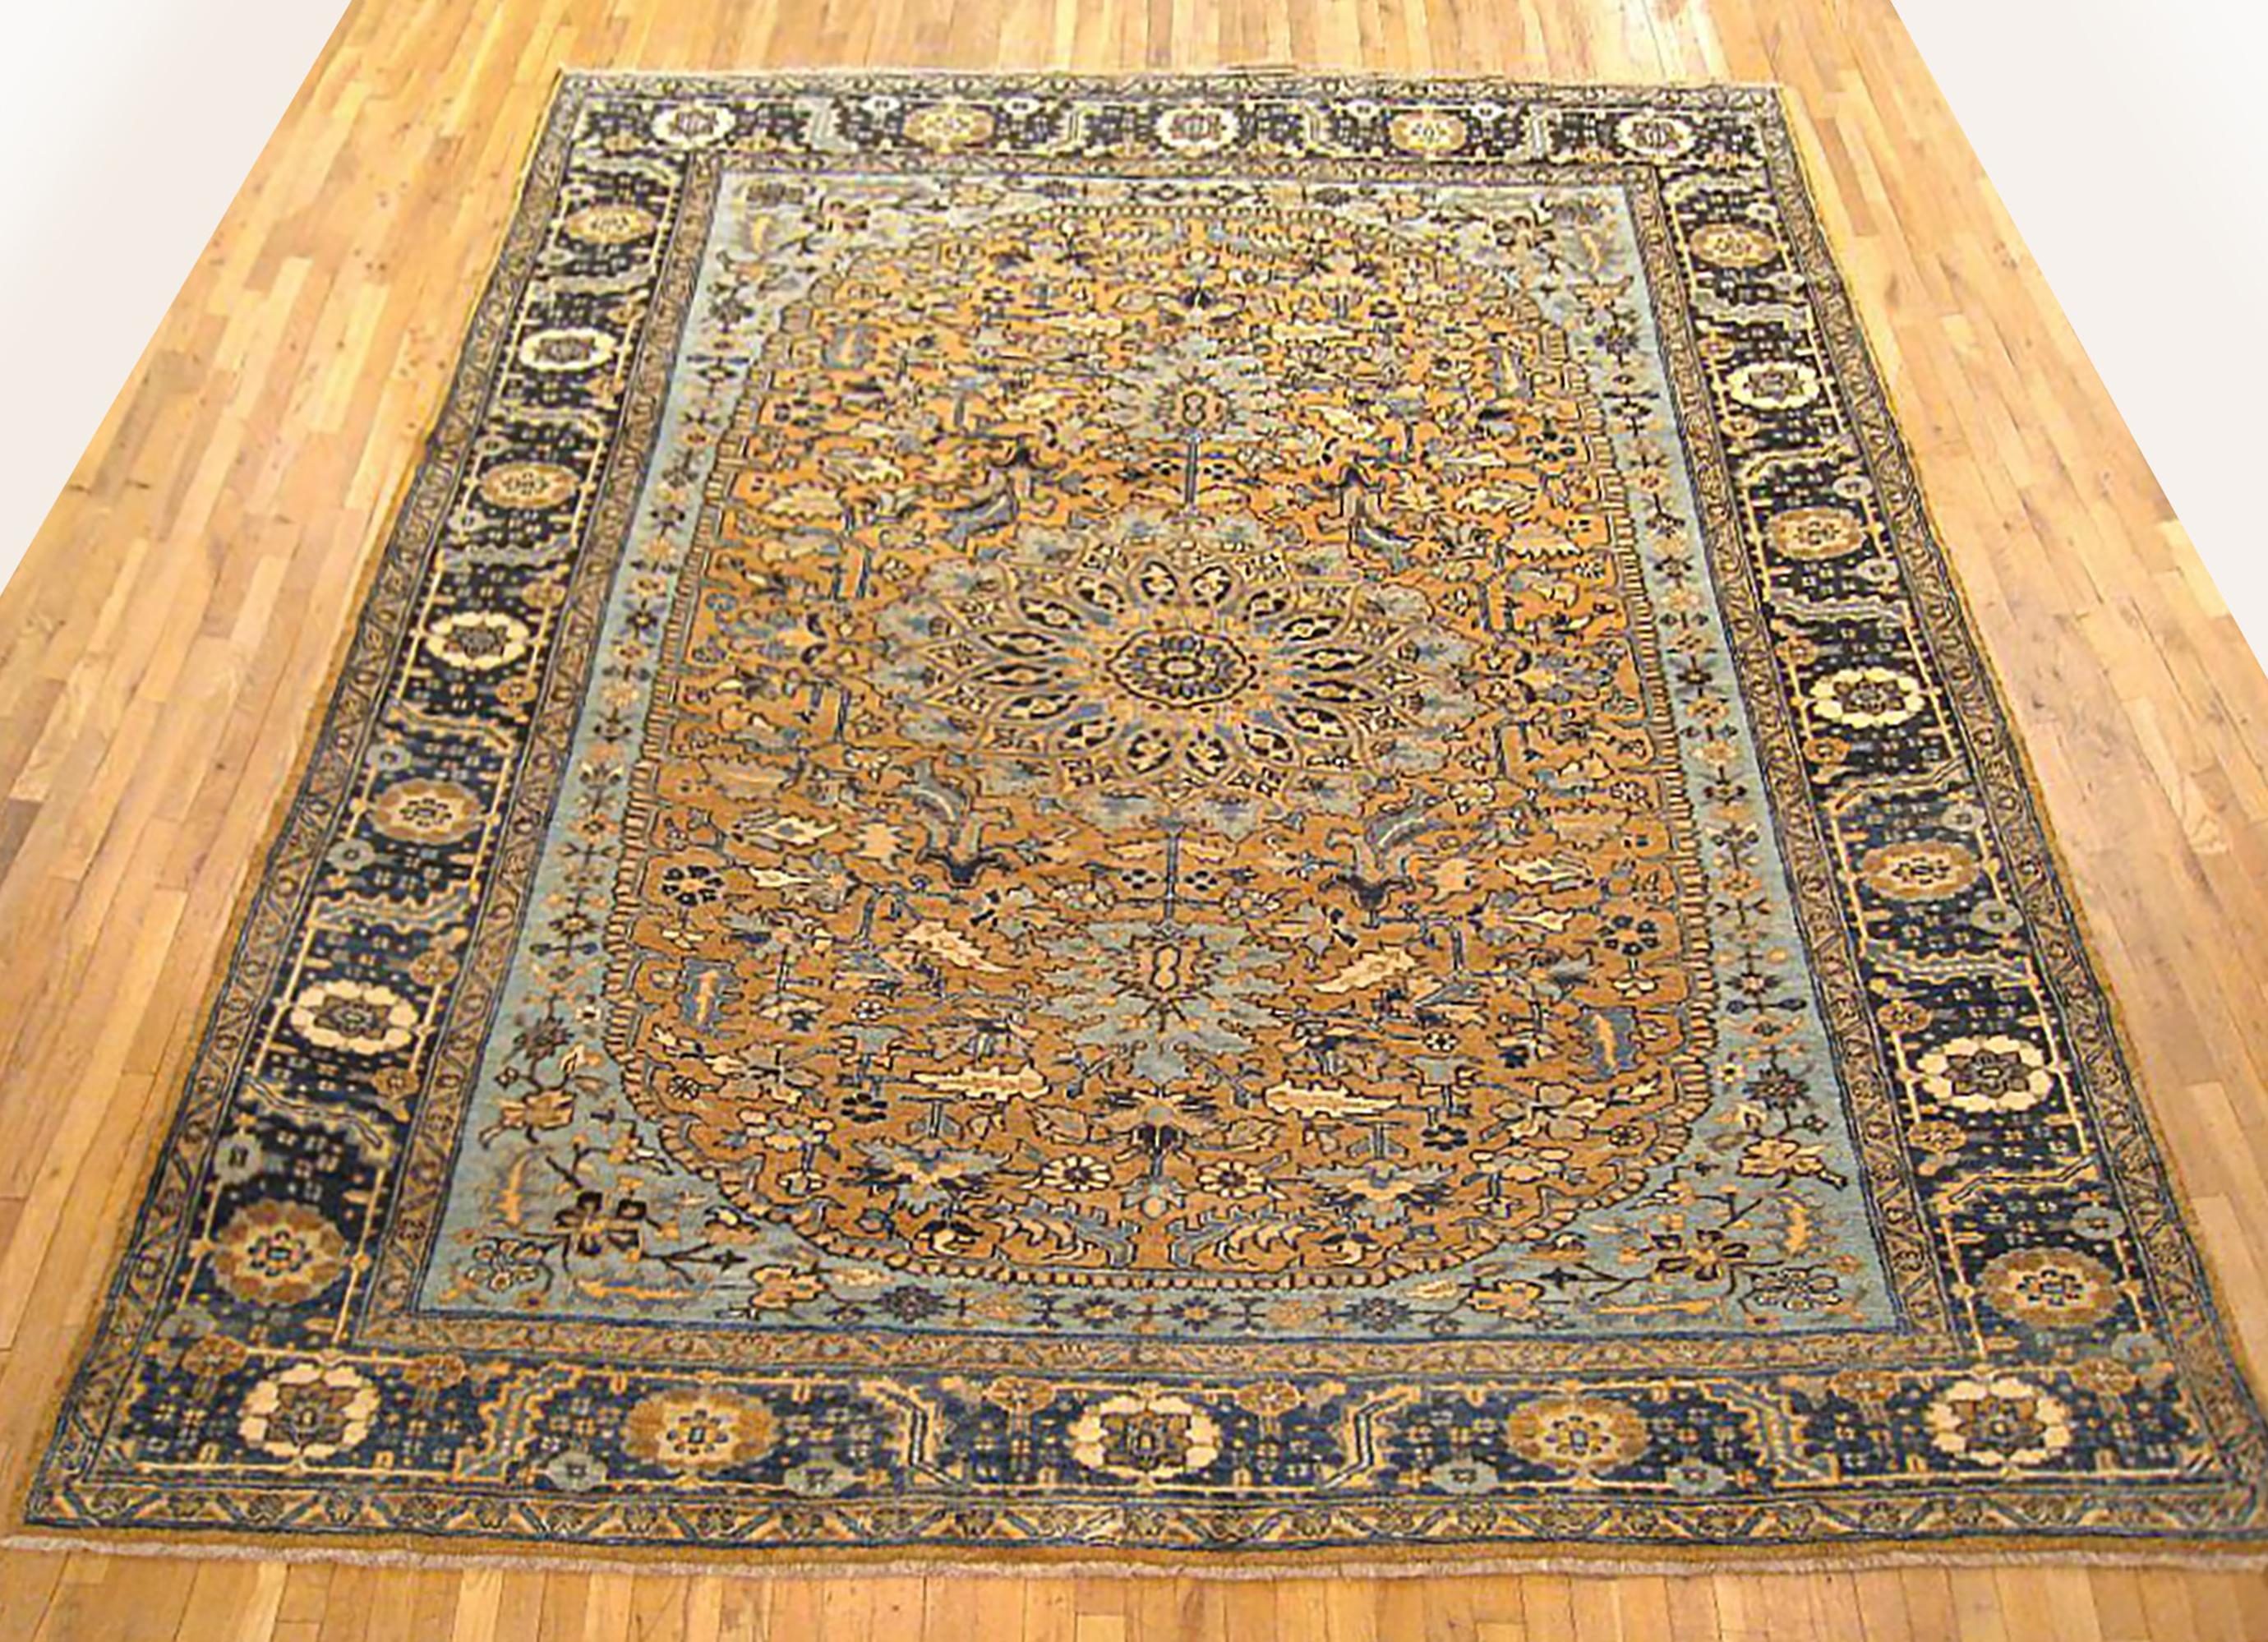 Vintage Persian Heriz Oriental rug, room size

A vintage Persian Heriz oriental rug, size 12'1